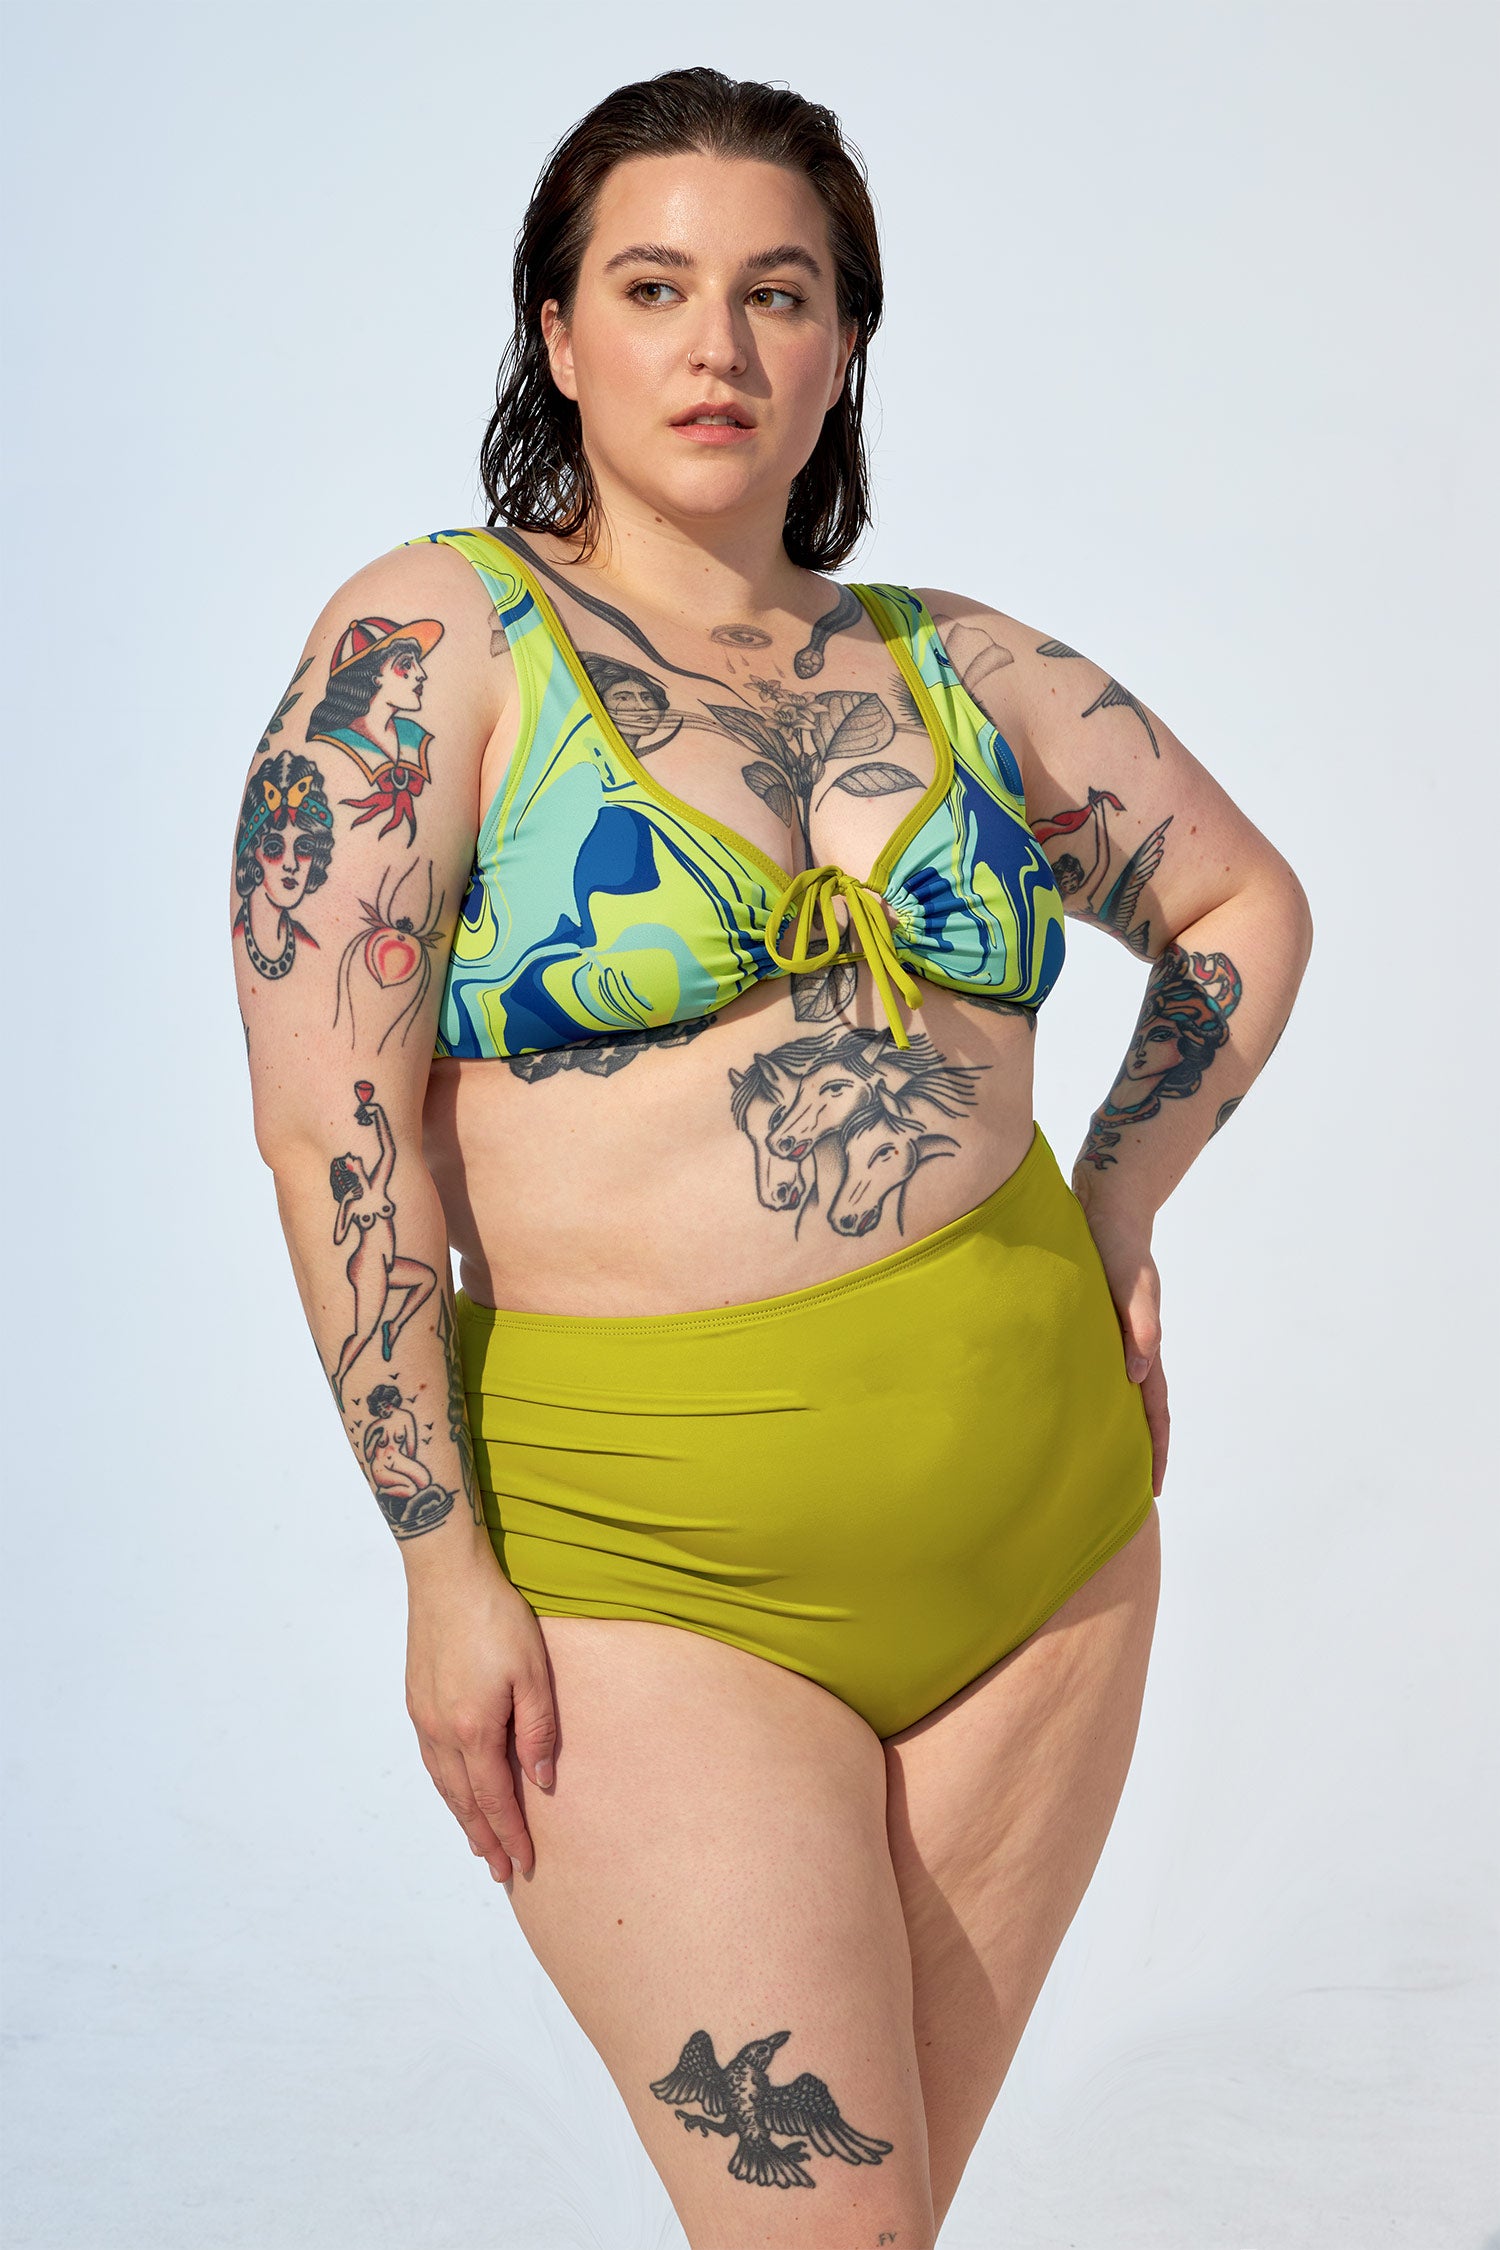 Large Size Bikini Bikini Woman Underwire Big Cup Ladies Swimsuit.Swimsuits  for All Women's Plus Size Halter Bikini Set